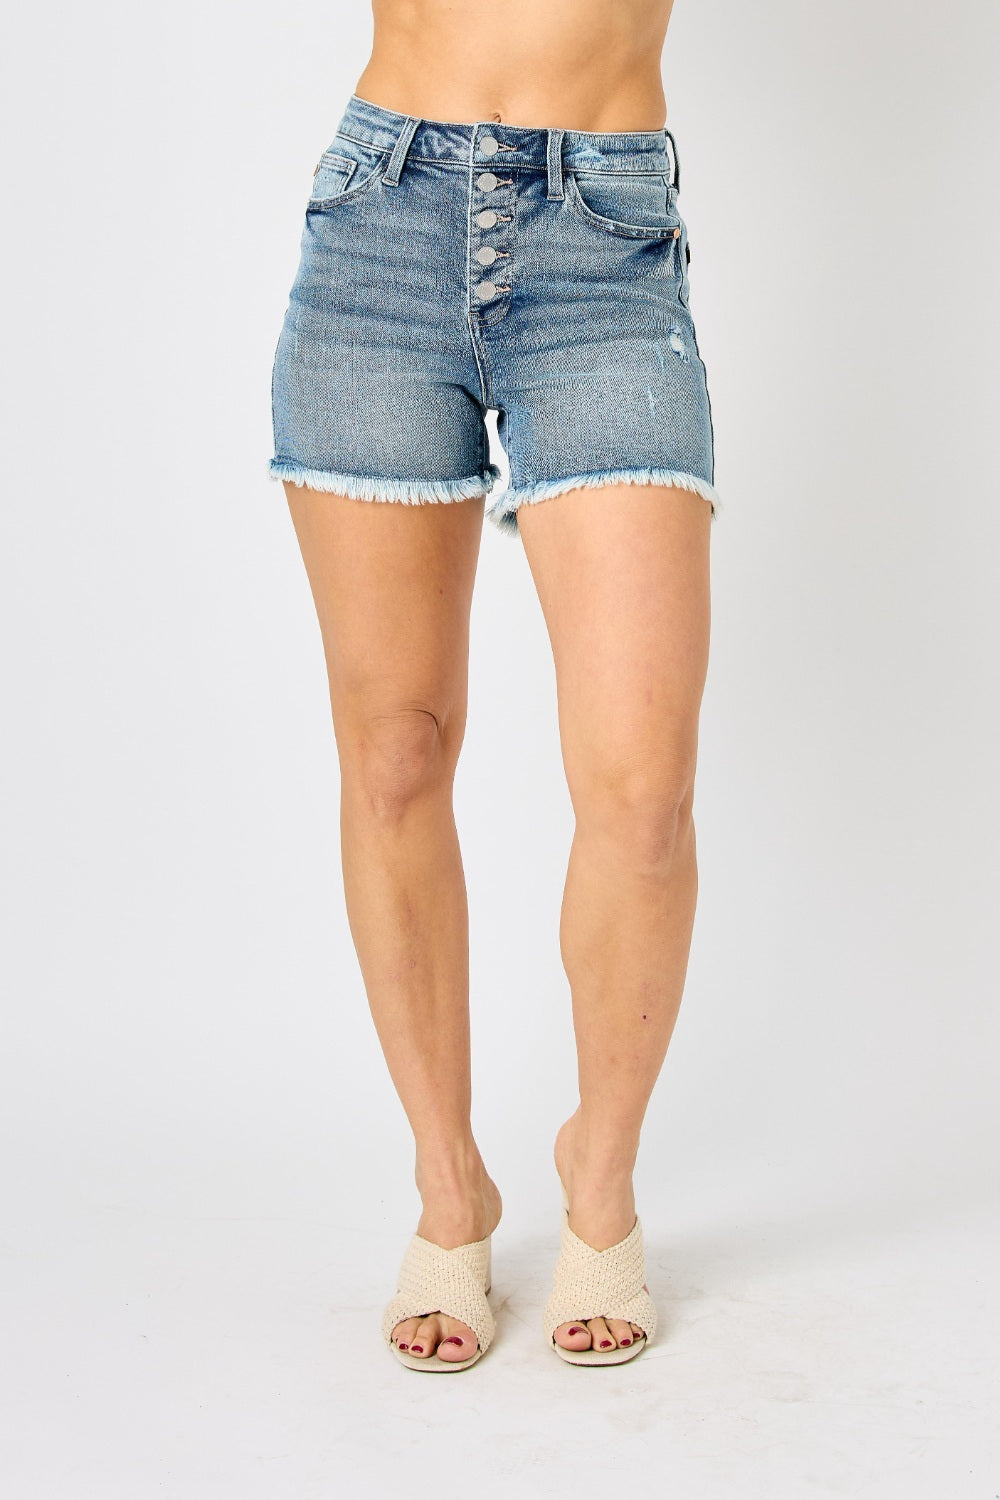 Judy Blue Full Size Button Fly Raw Hem Denim Shorts - Denim Shorts - FITGGINS